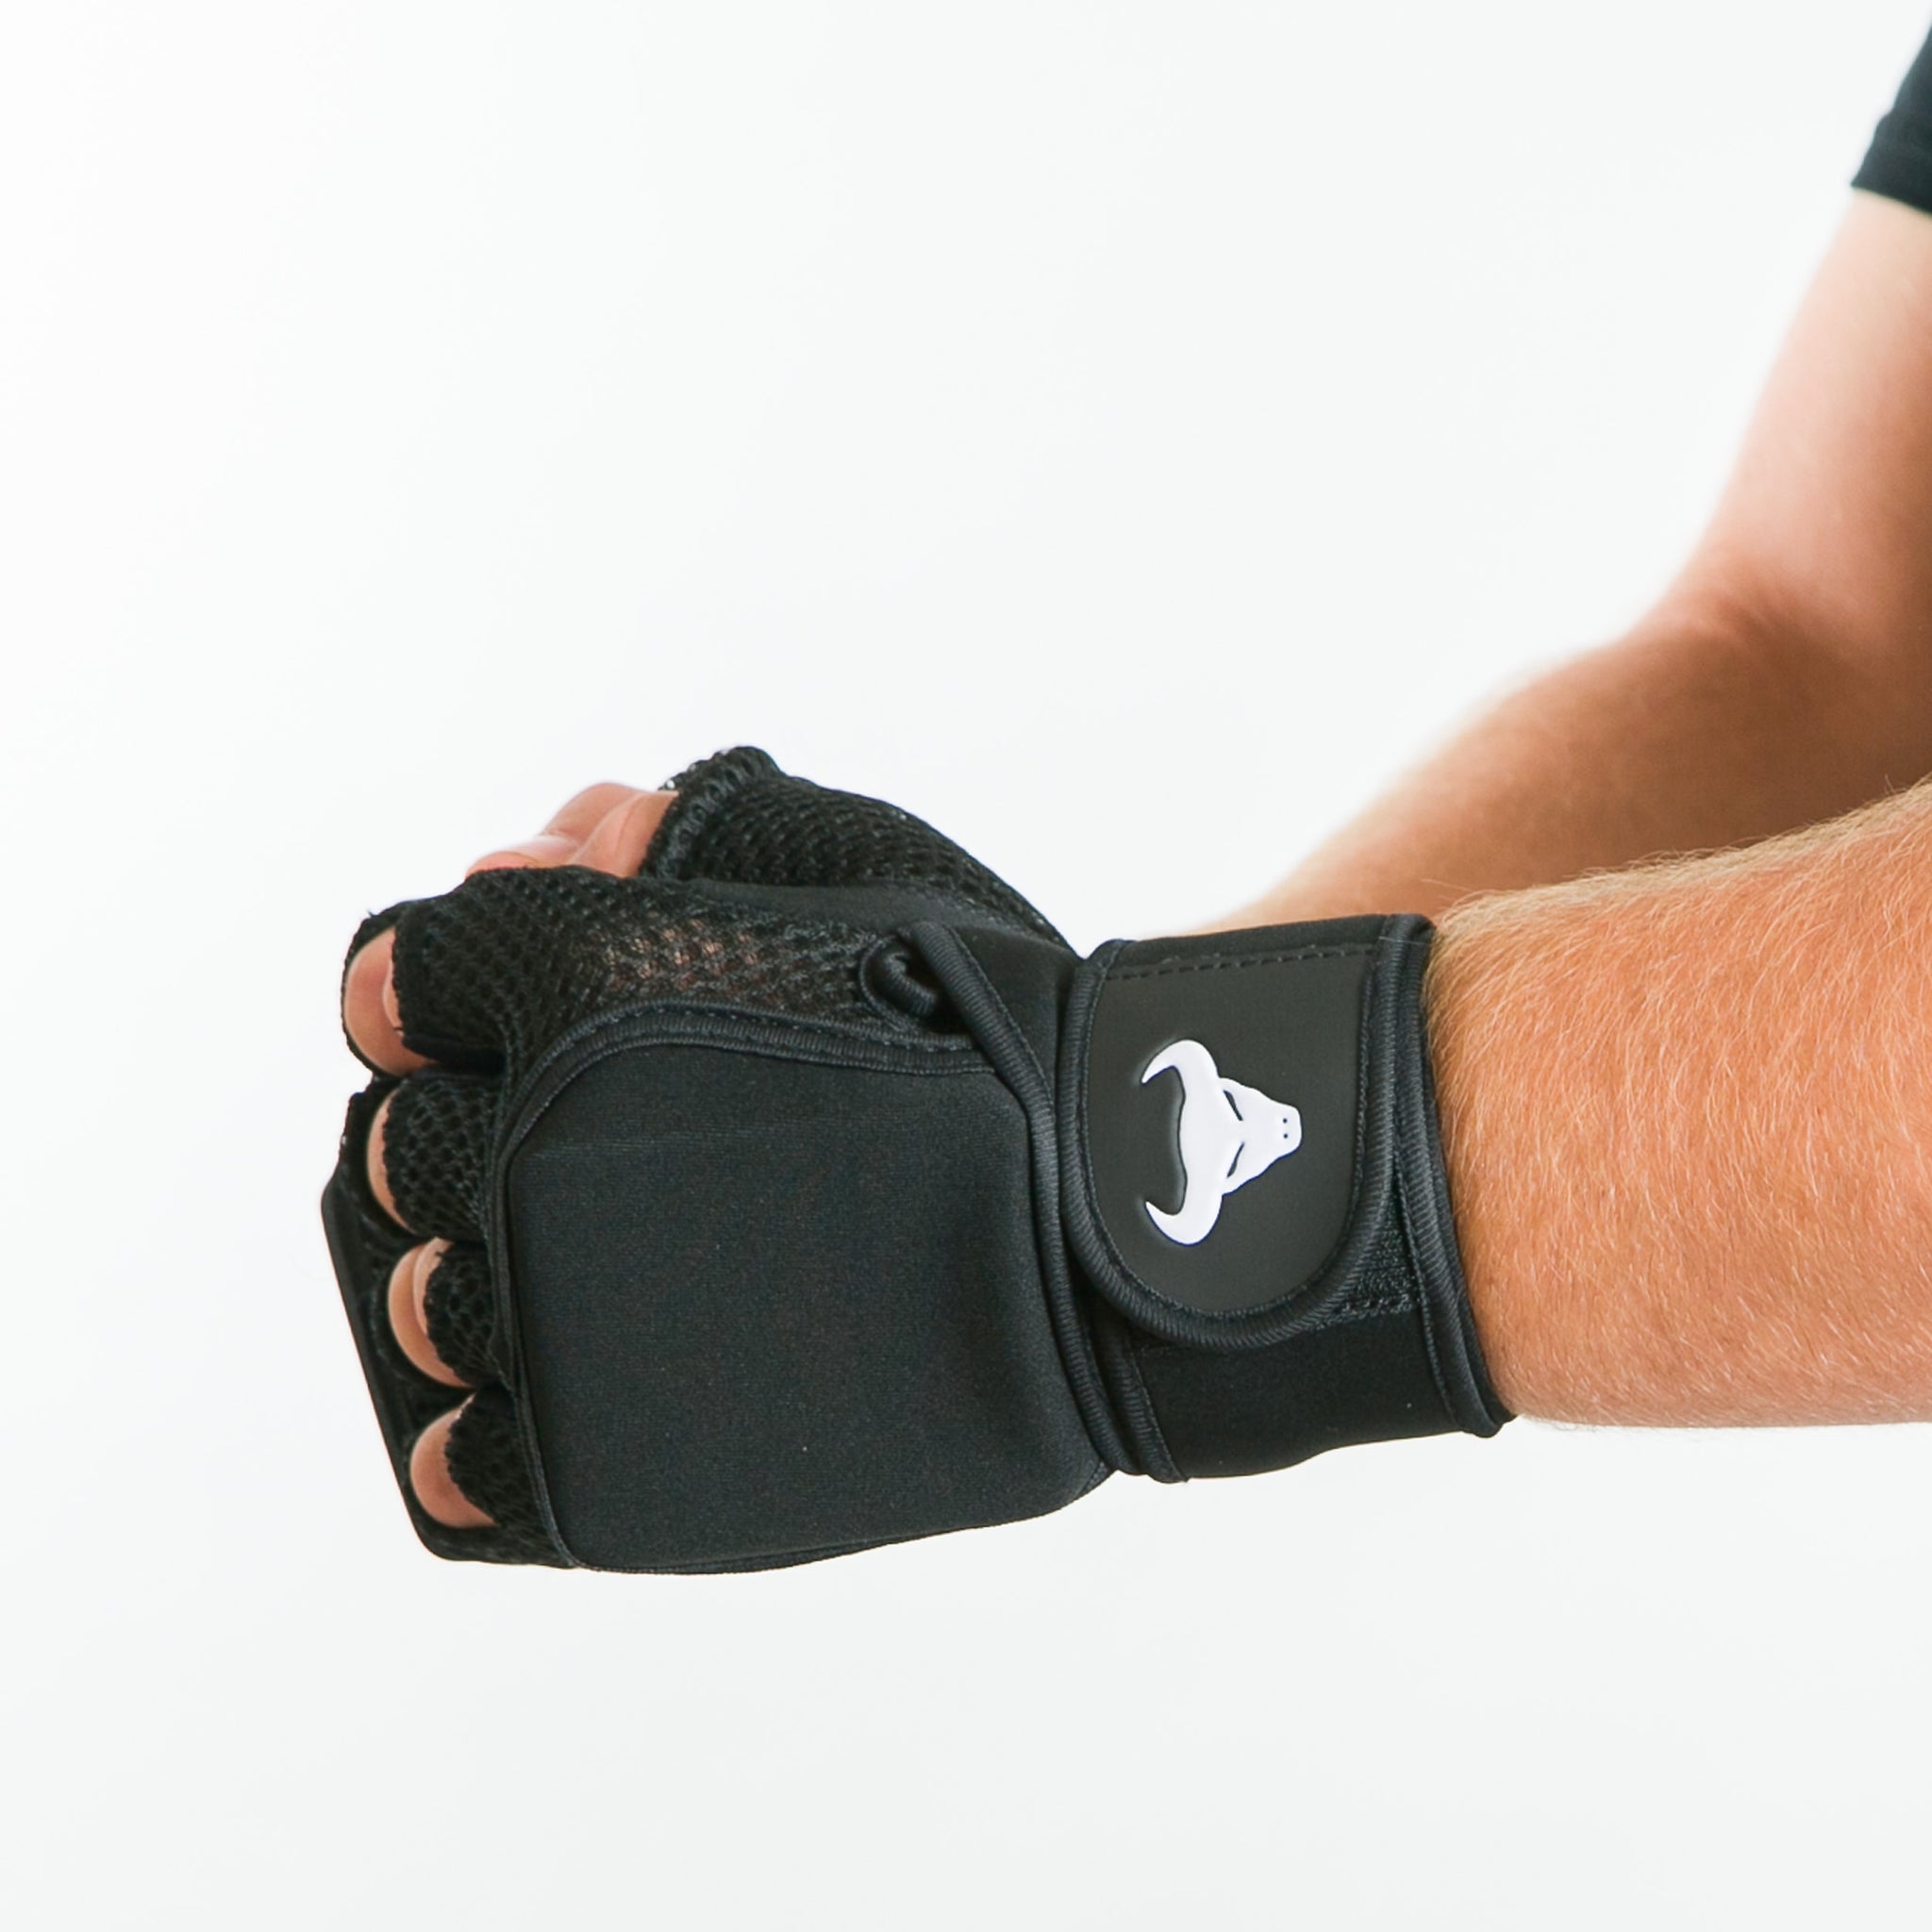 Empower Weighted Fitness Gloves Blac - Patilen.com deals